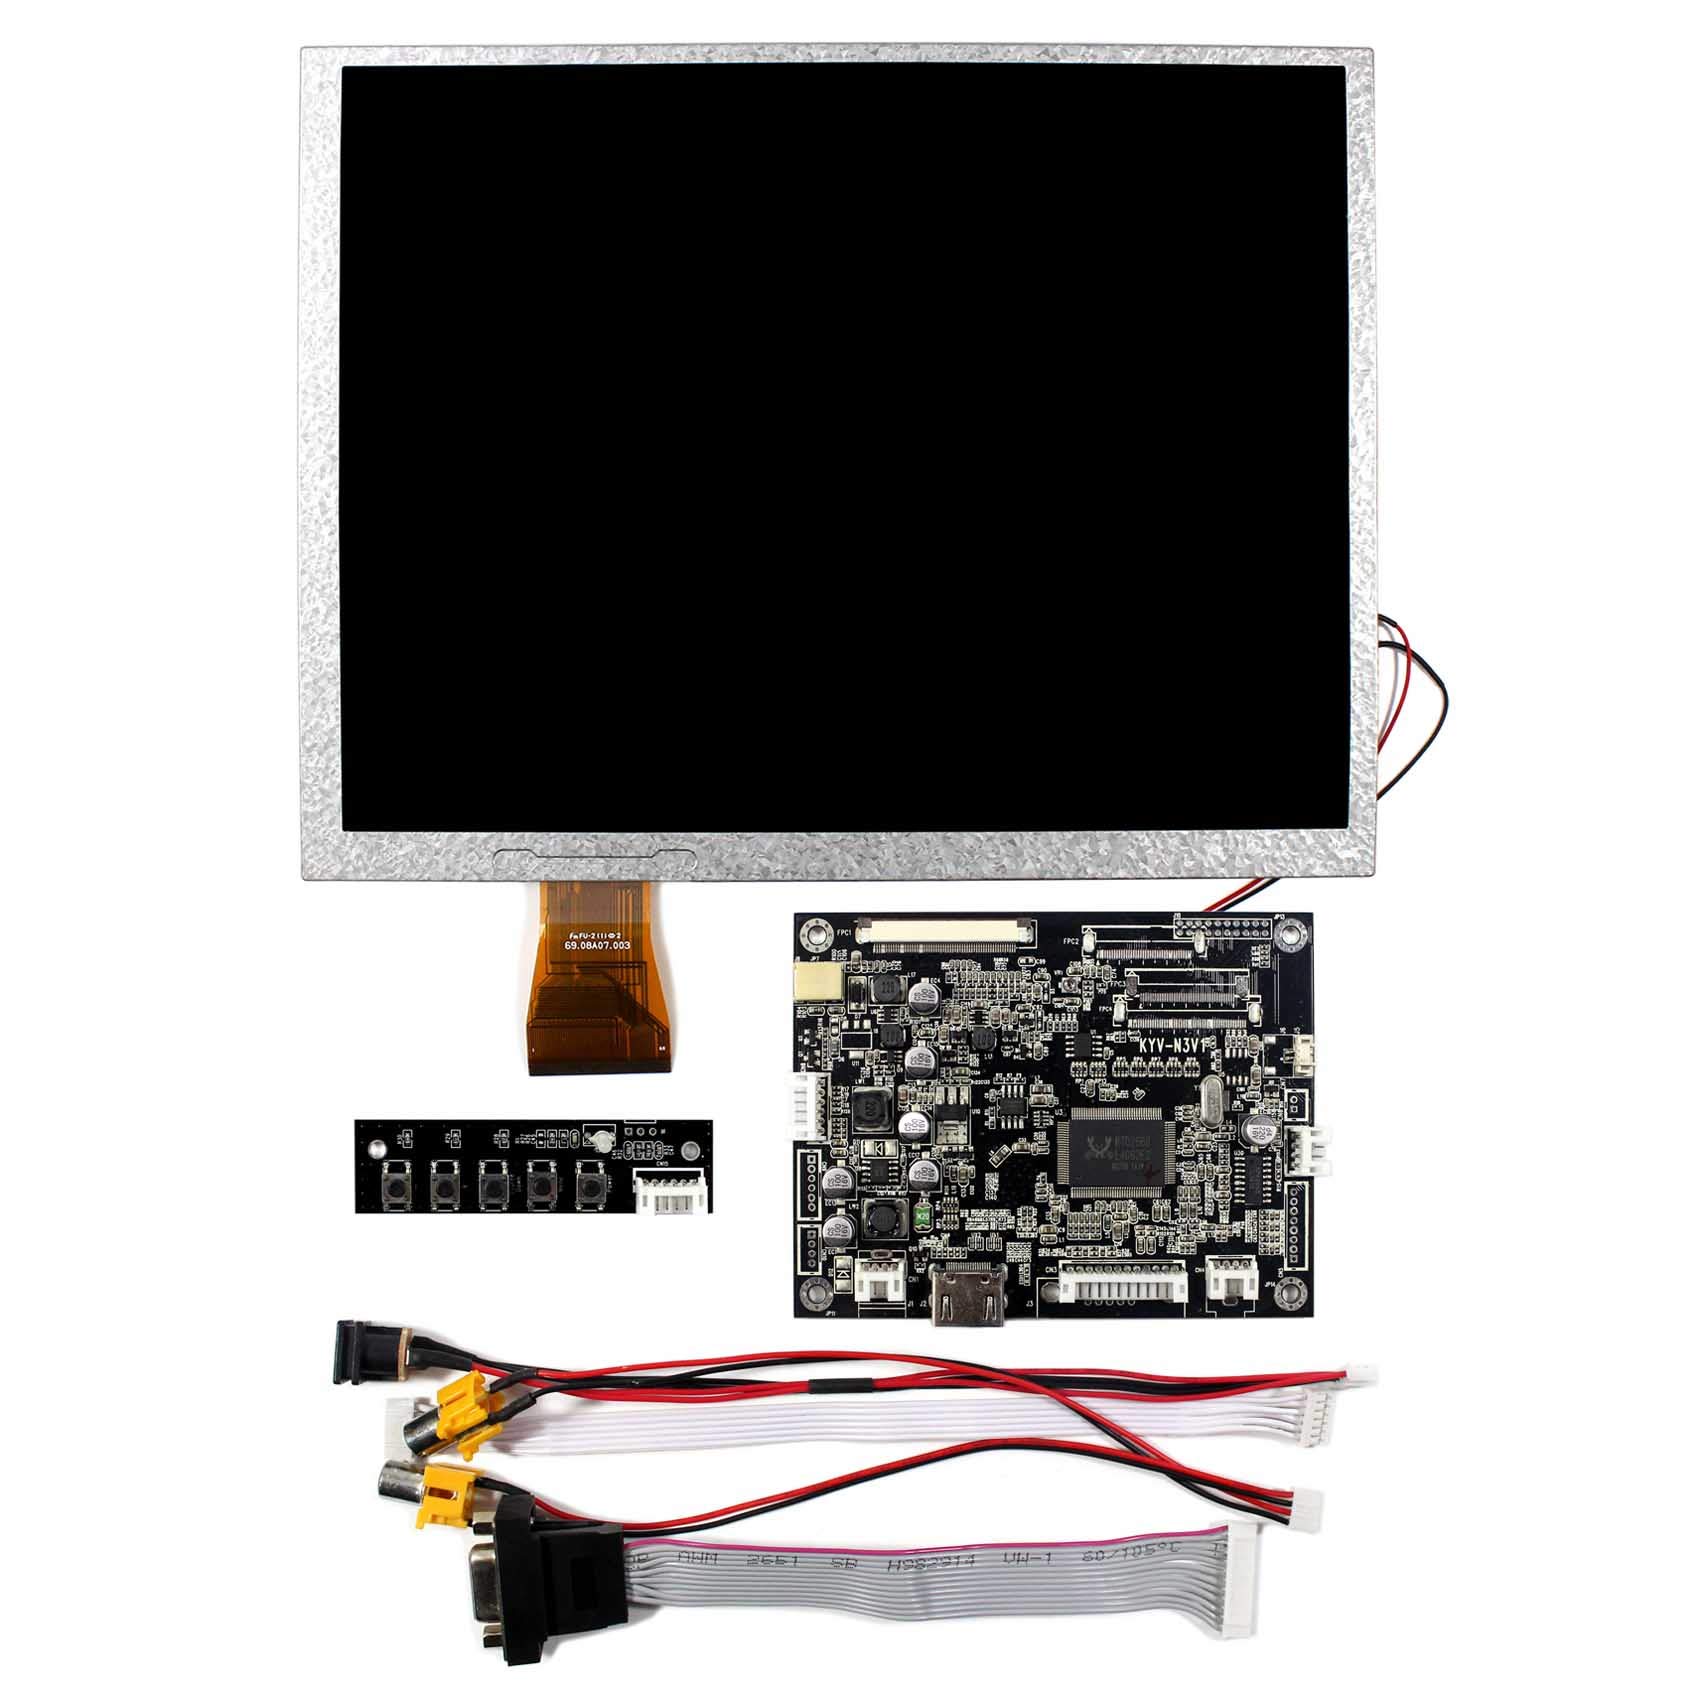 VSDISPLAY 10.4 inch 800X600 LCD Screen A104SN03 V1 with HD-MI+VGA+AV LCD Controller Board